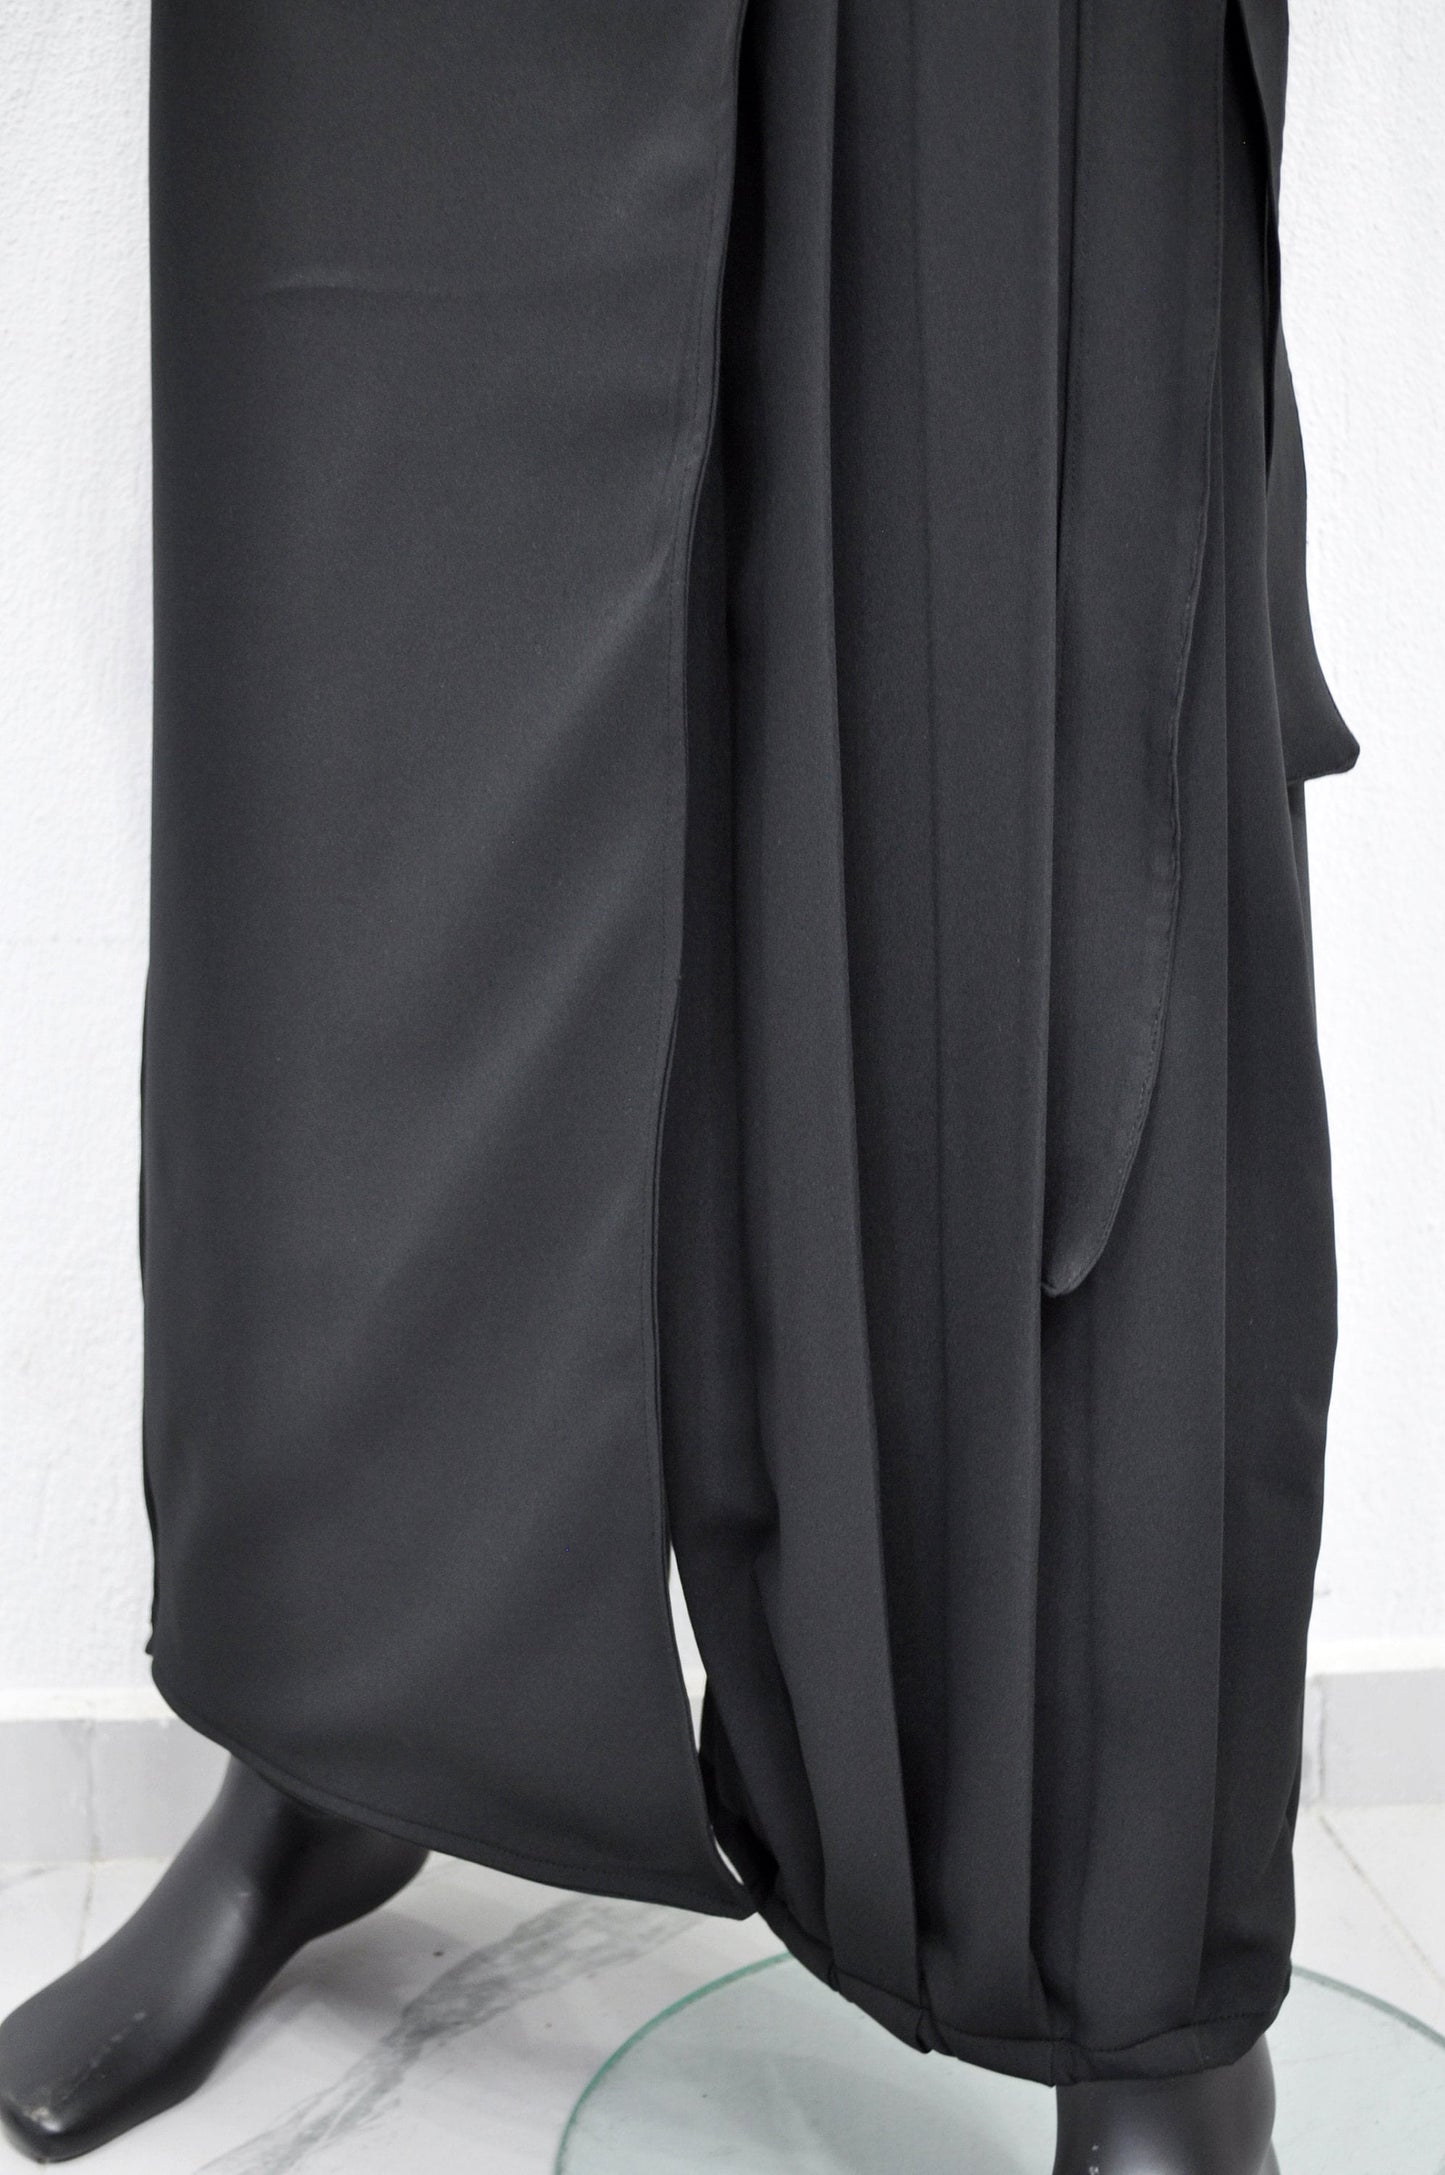 XS - 8XL Wrap Kilt Skirt Pant,Pleated A-line, Dark Black Mid-Lenght irregular Skirt,Relaxed,Cyberpunk Steampunk,Regalo,Kreso,Ashashin- BB868